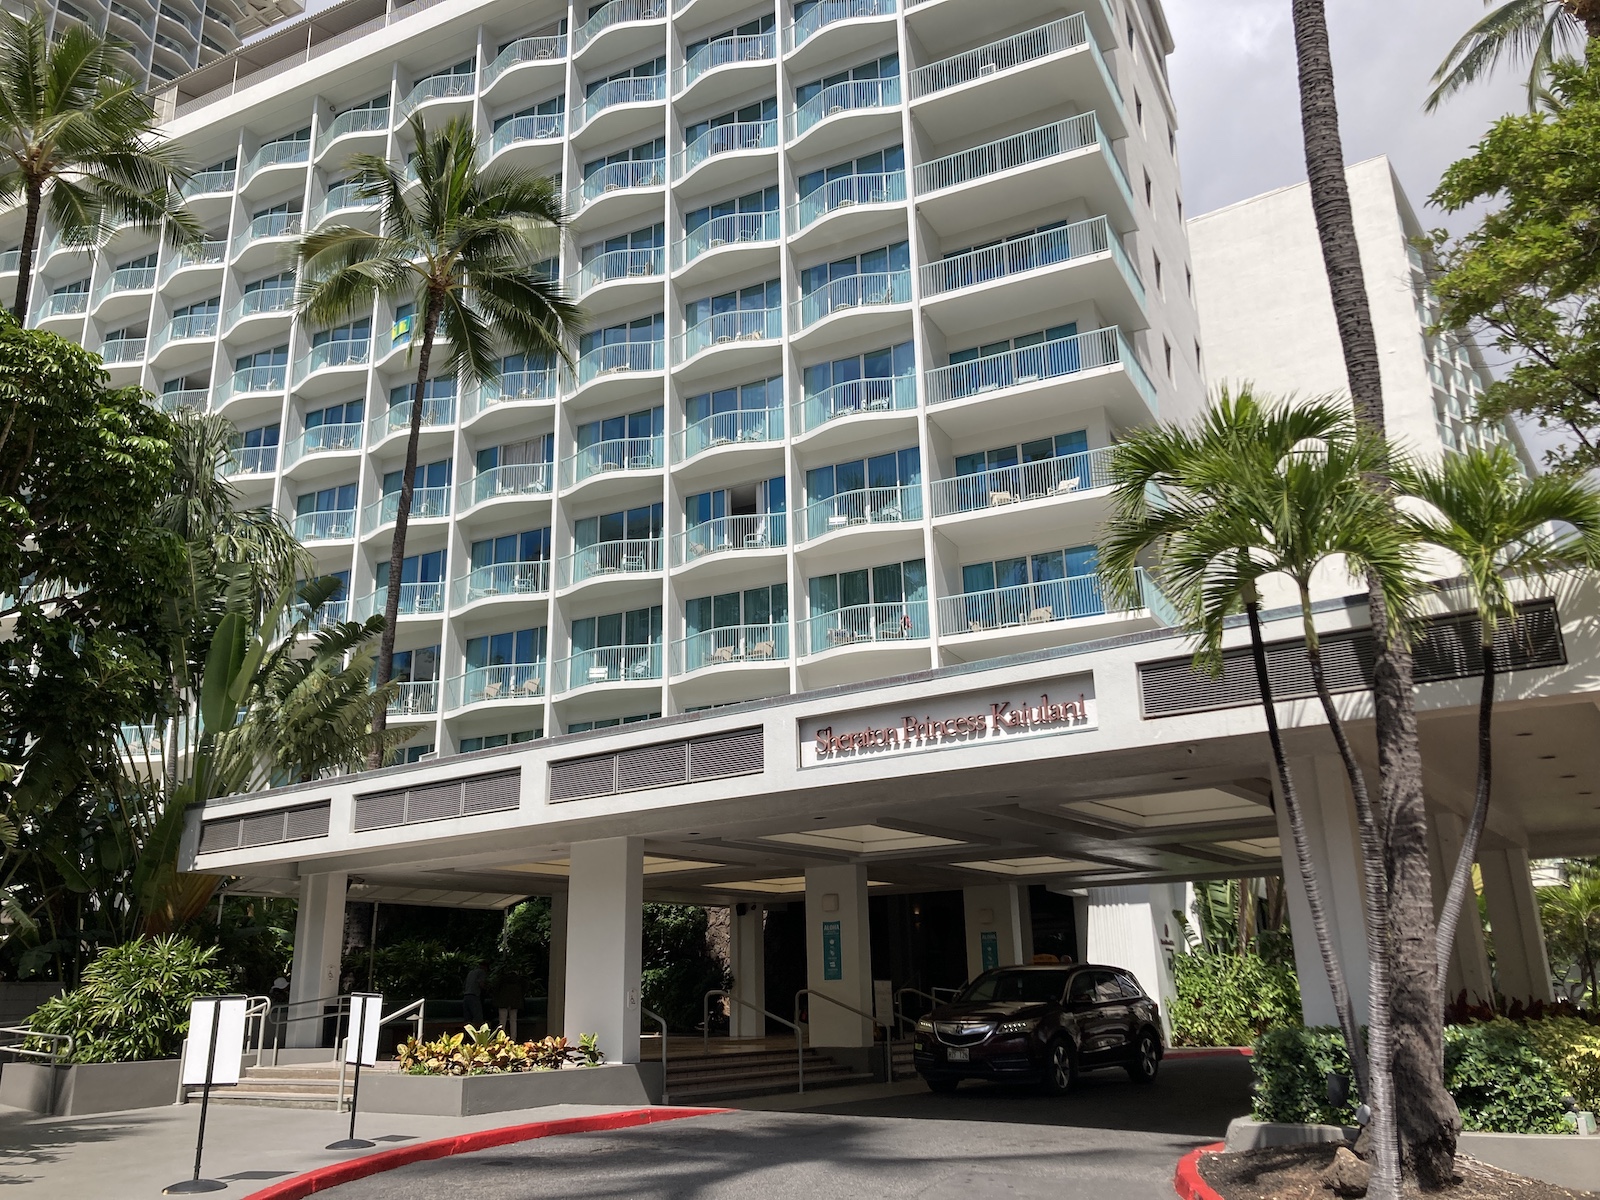 Hotel Review: Sheraton Princess Kaiulani in Waikiki, Hawaii